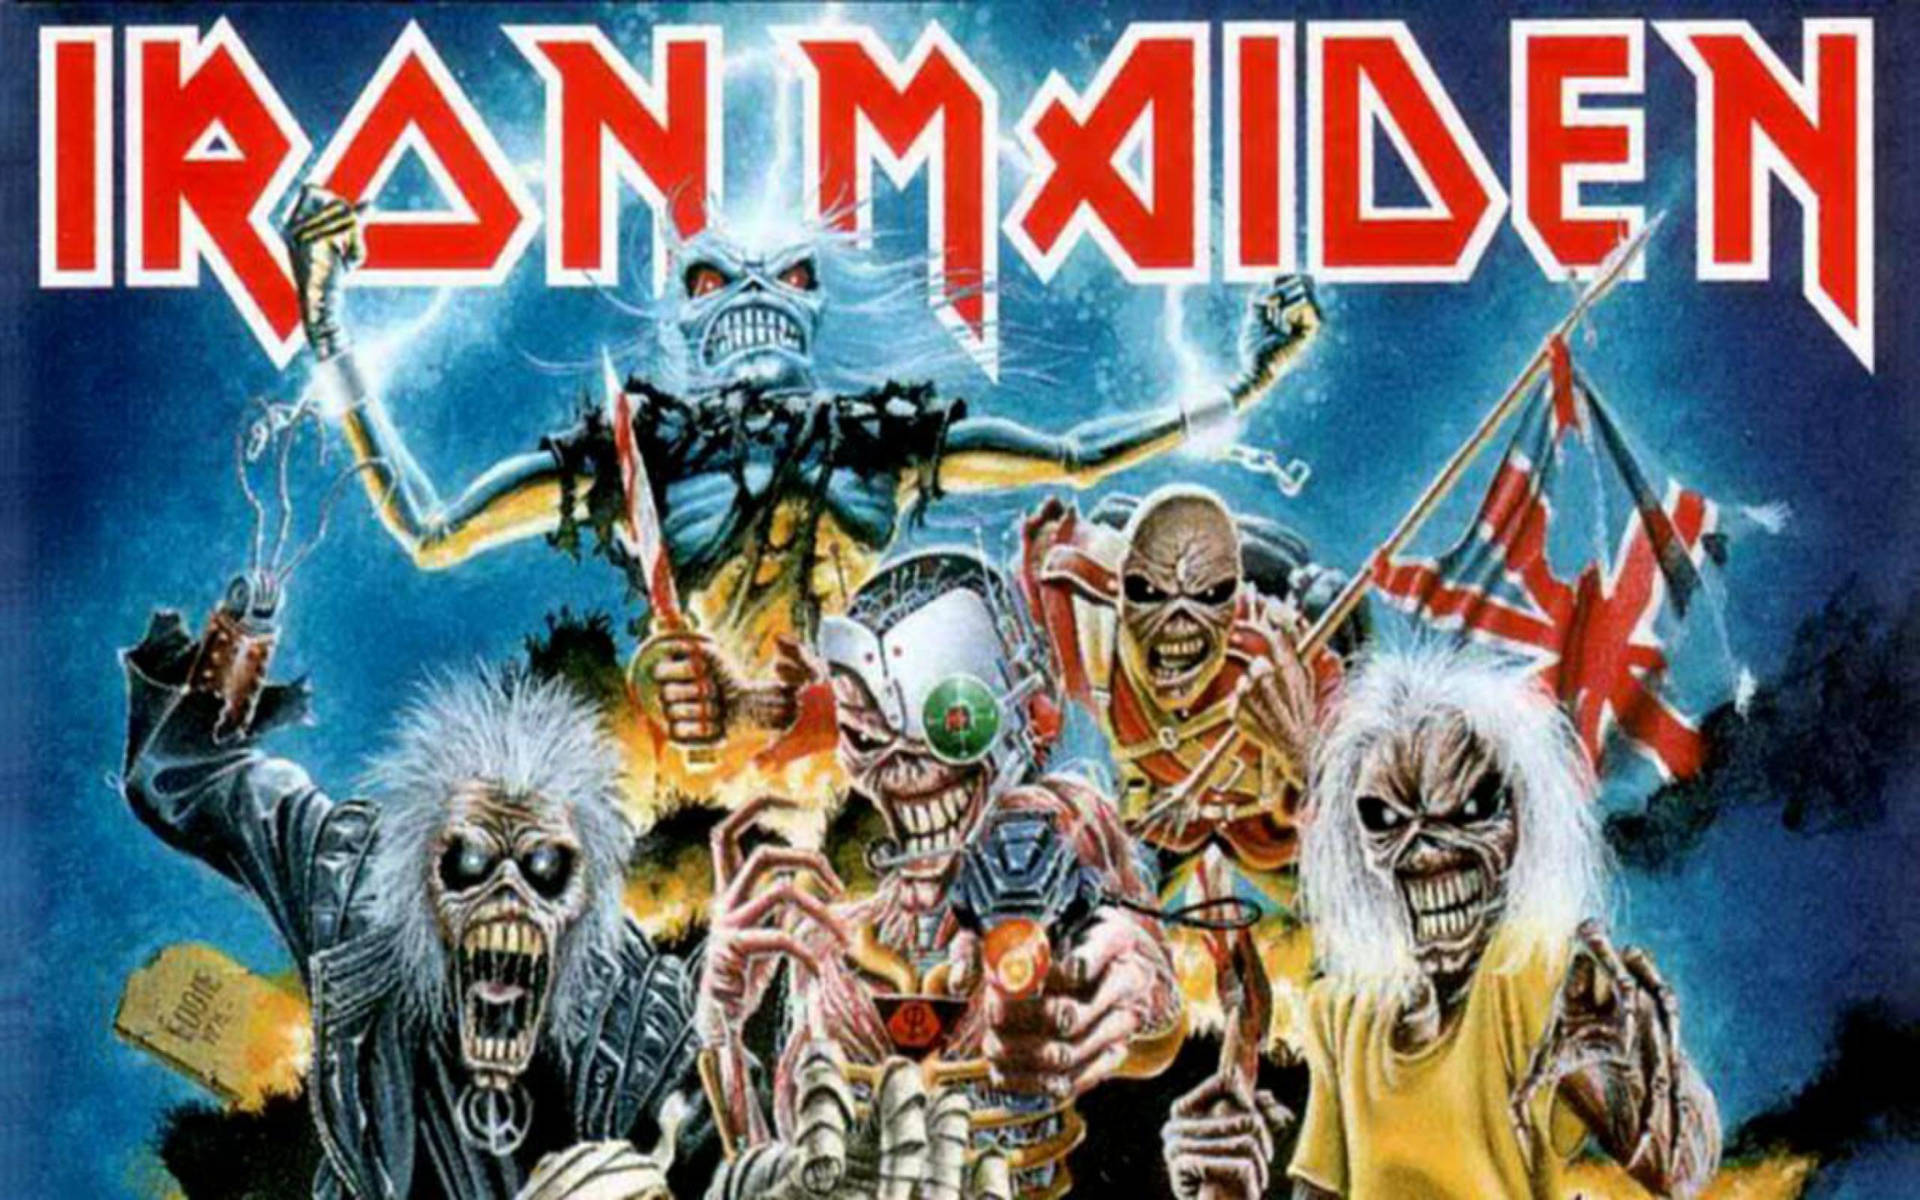 The Legendary Eddie From Iron Maiden Wallpaper